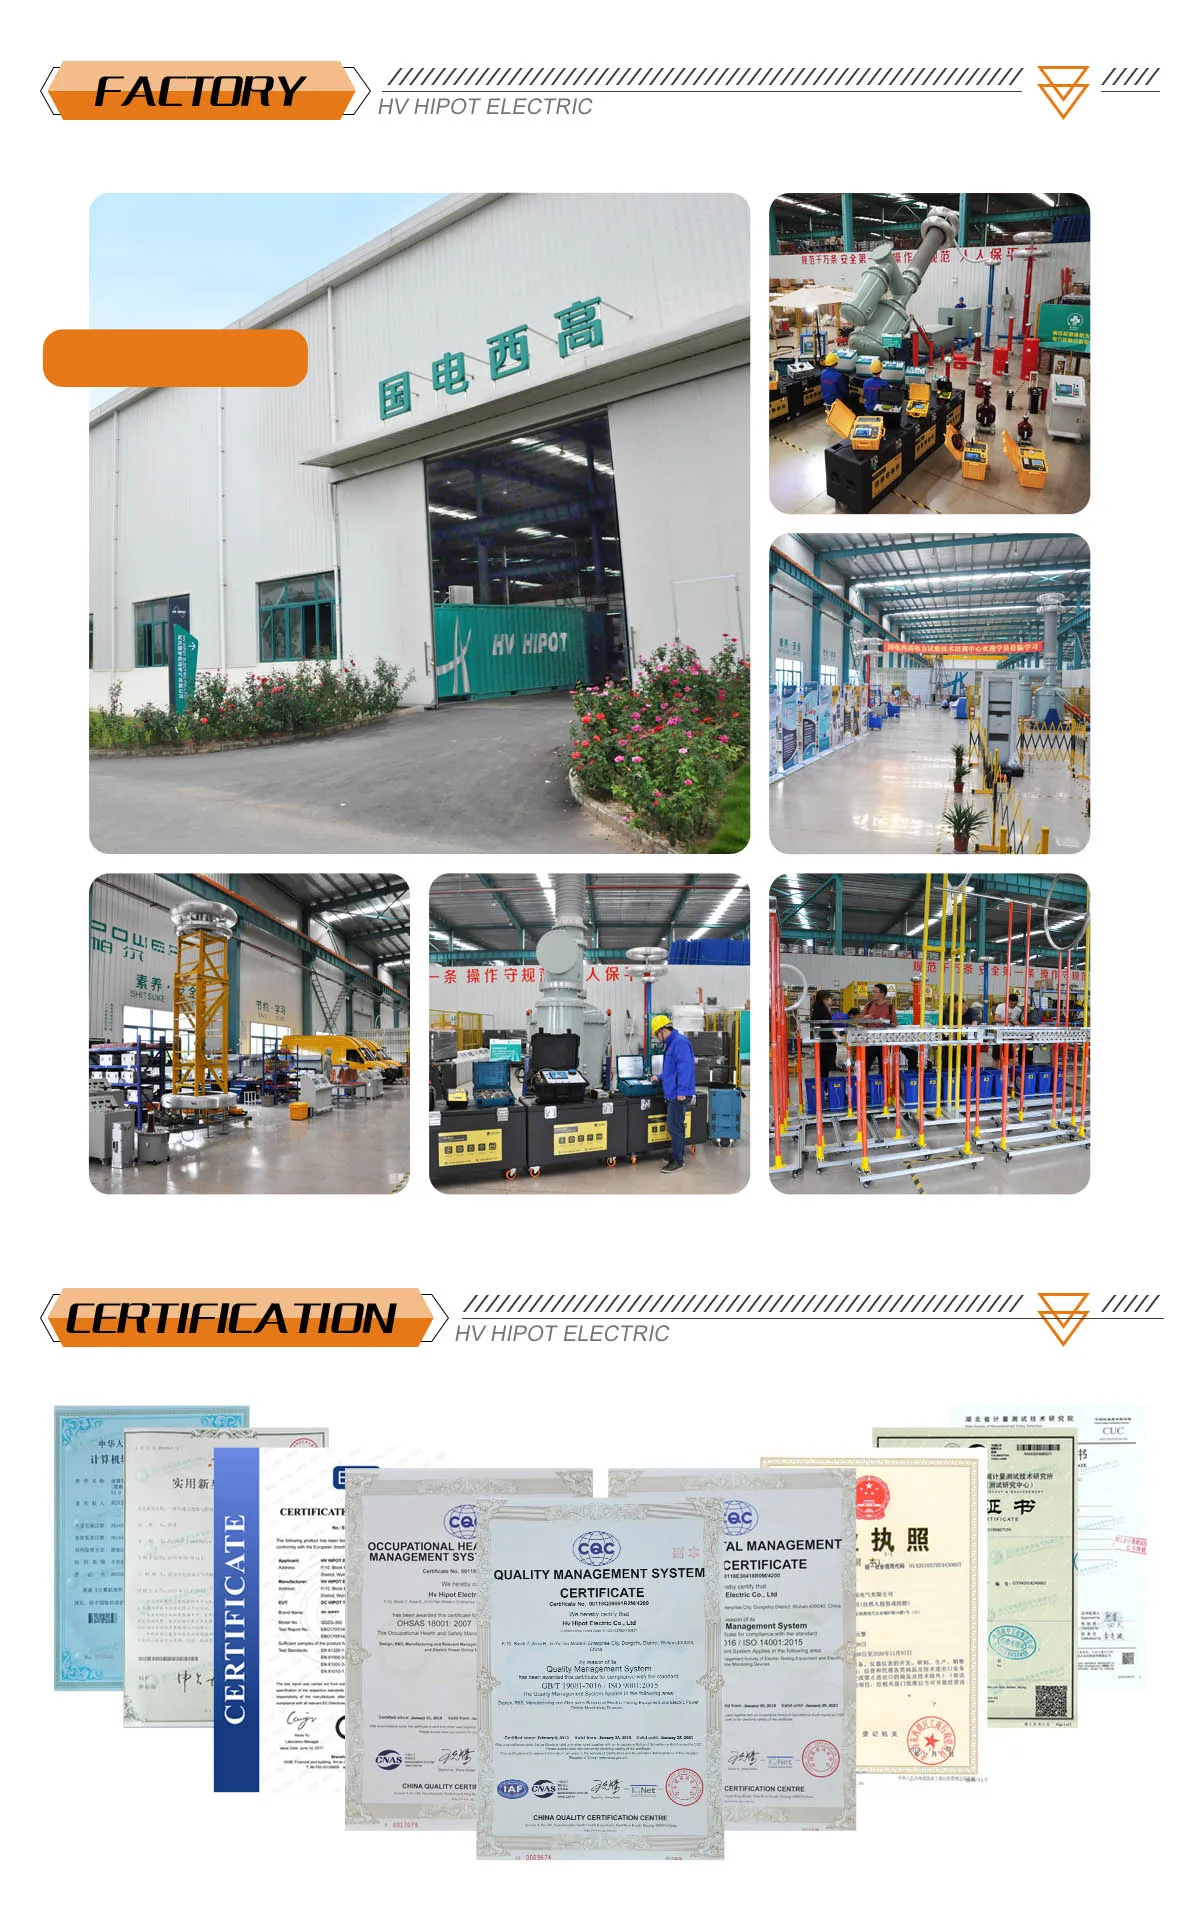 Factory & Certificate